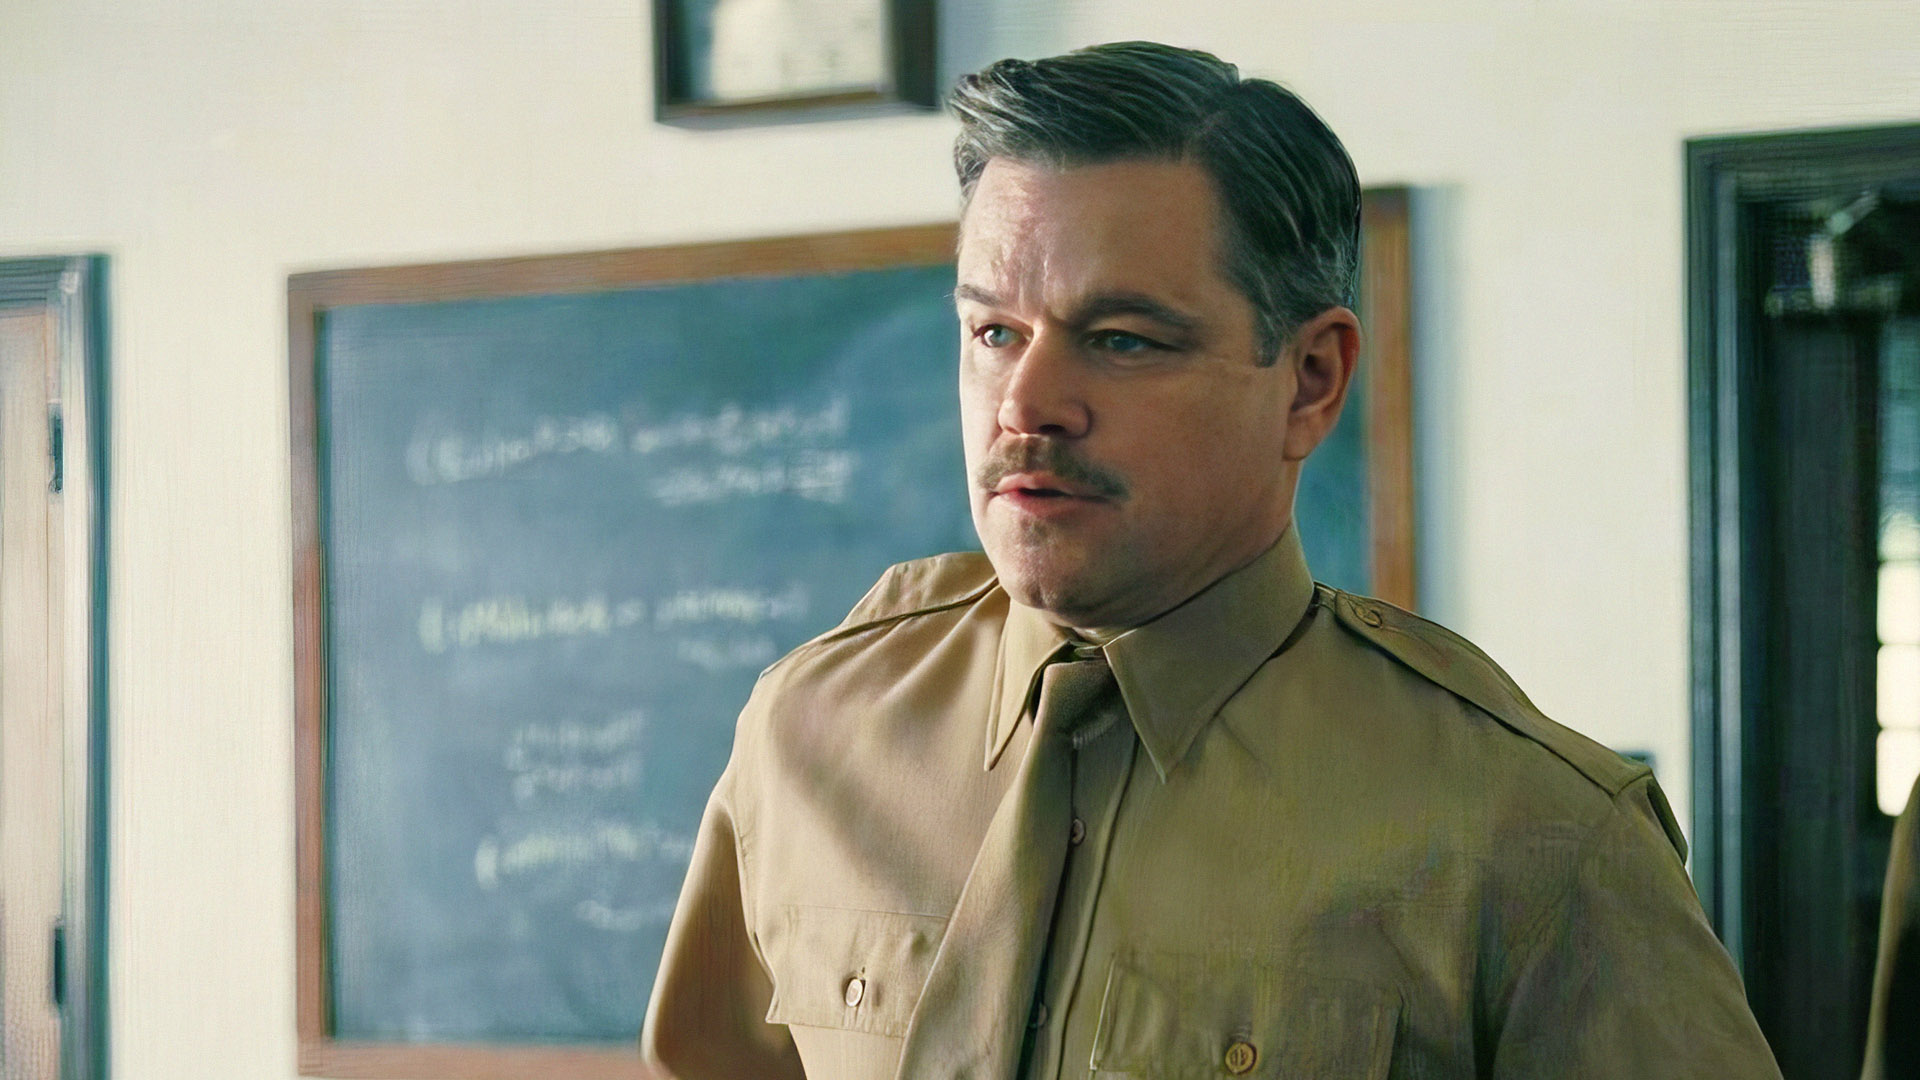 What Made Matt Damon Return to Acting Amid a Break?